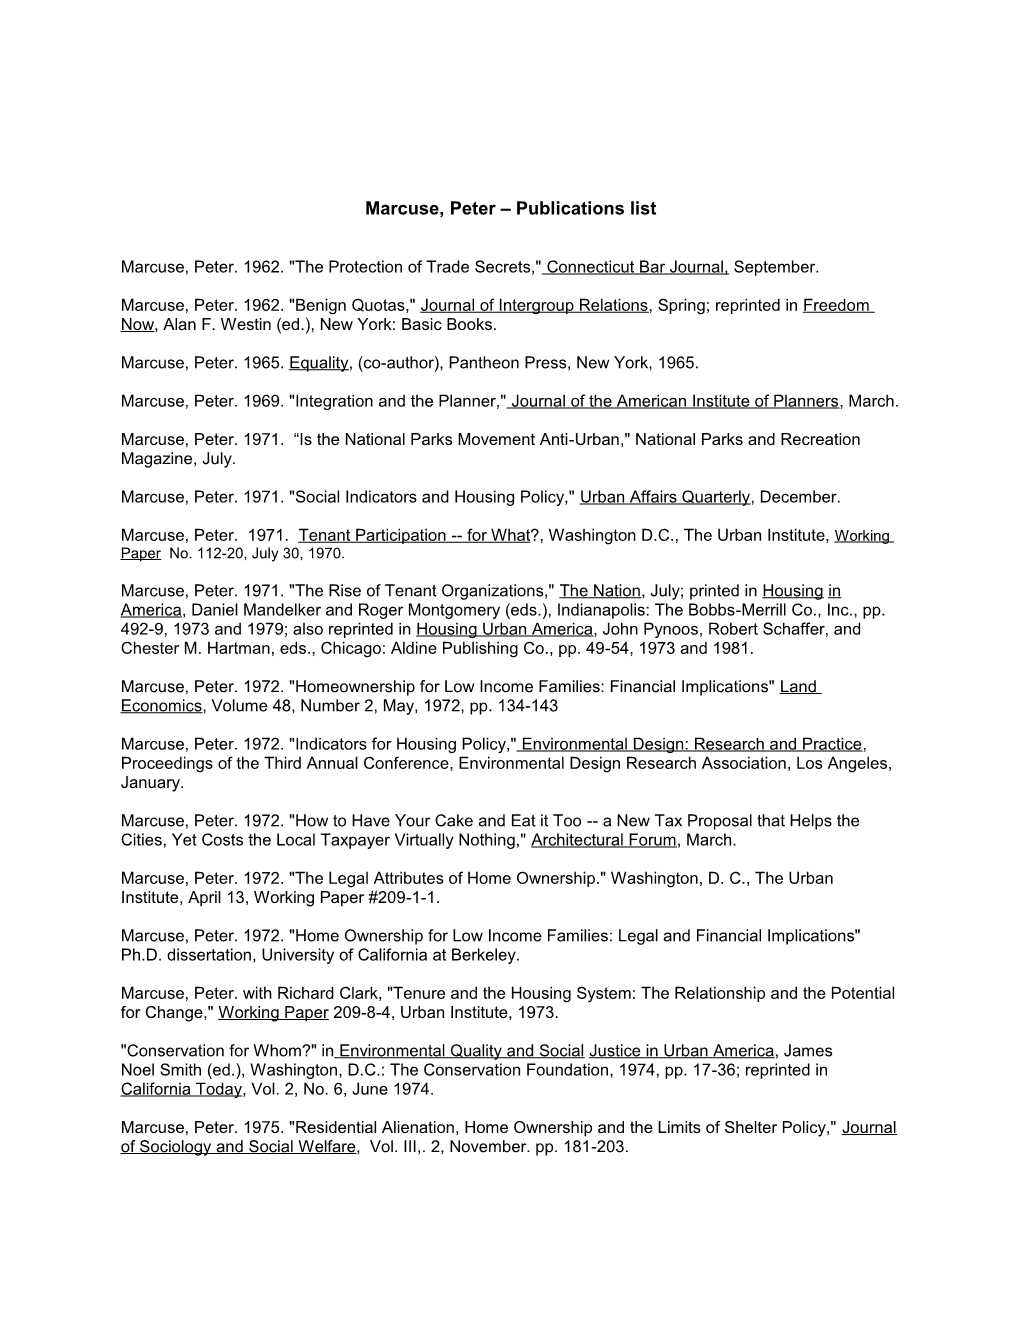 Marcuse, Peter Publications List